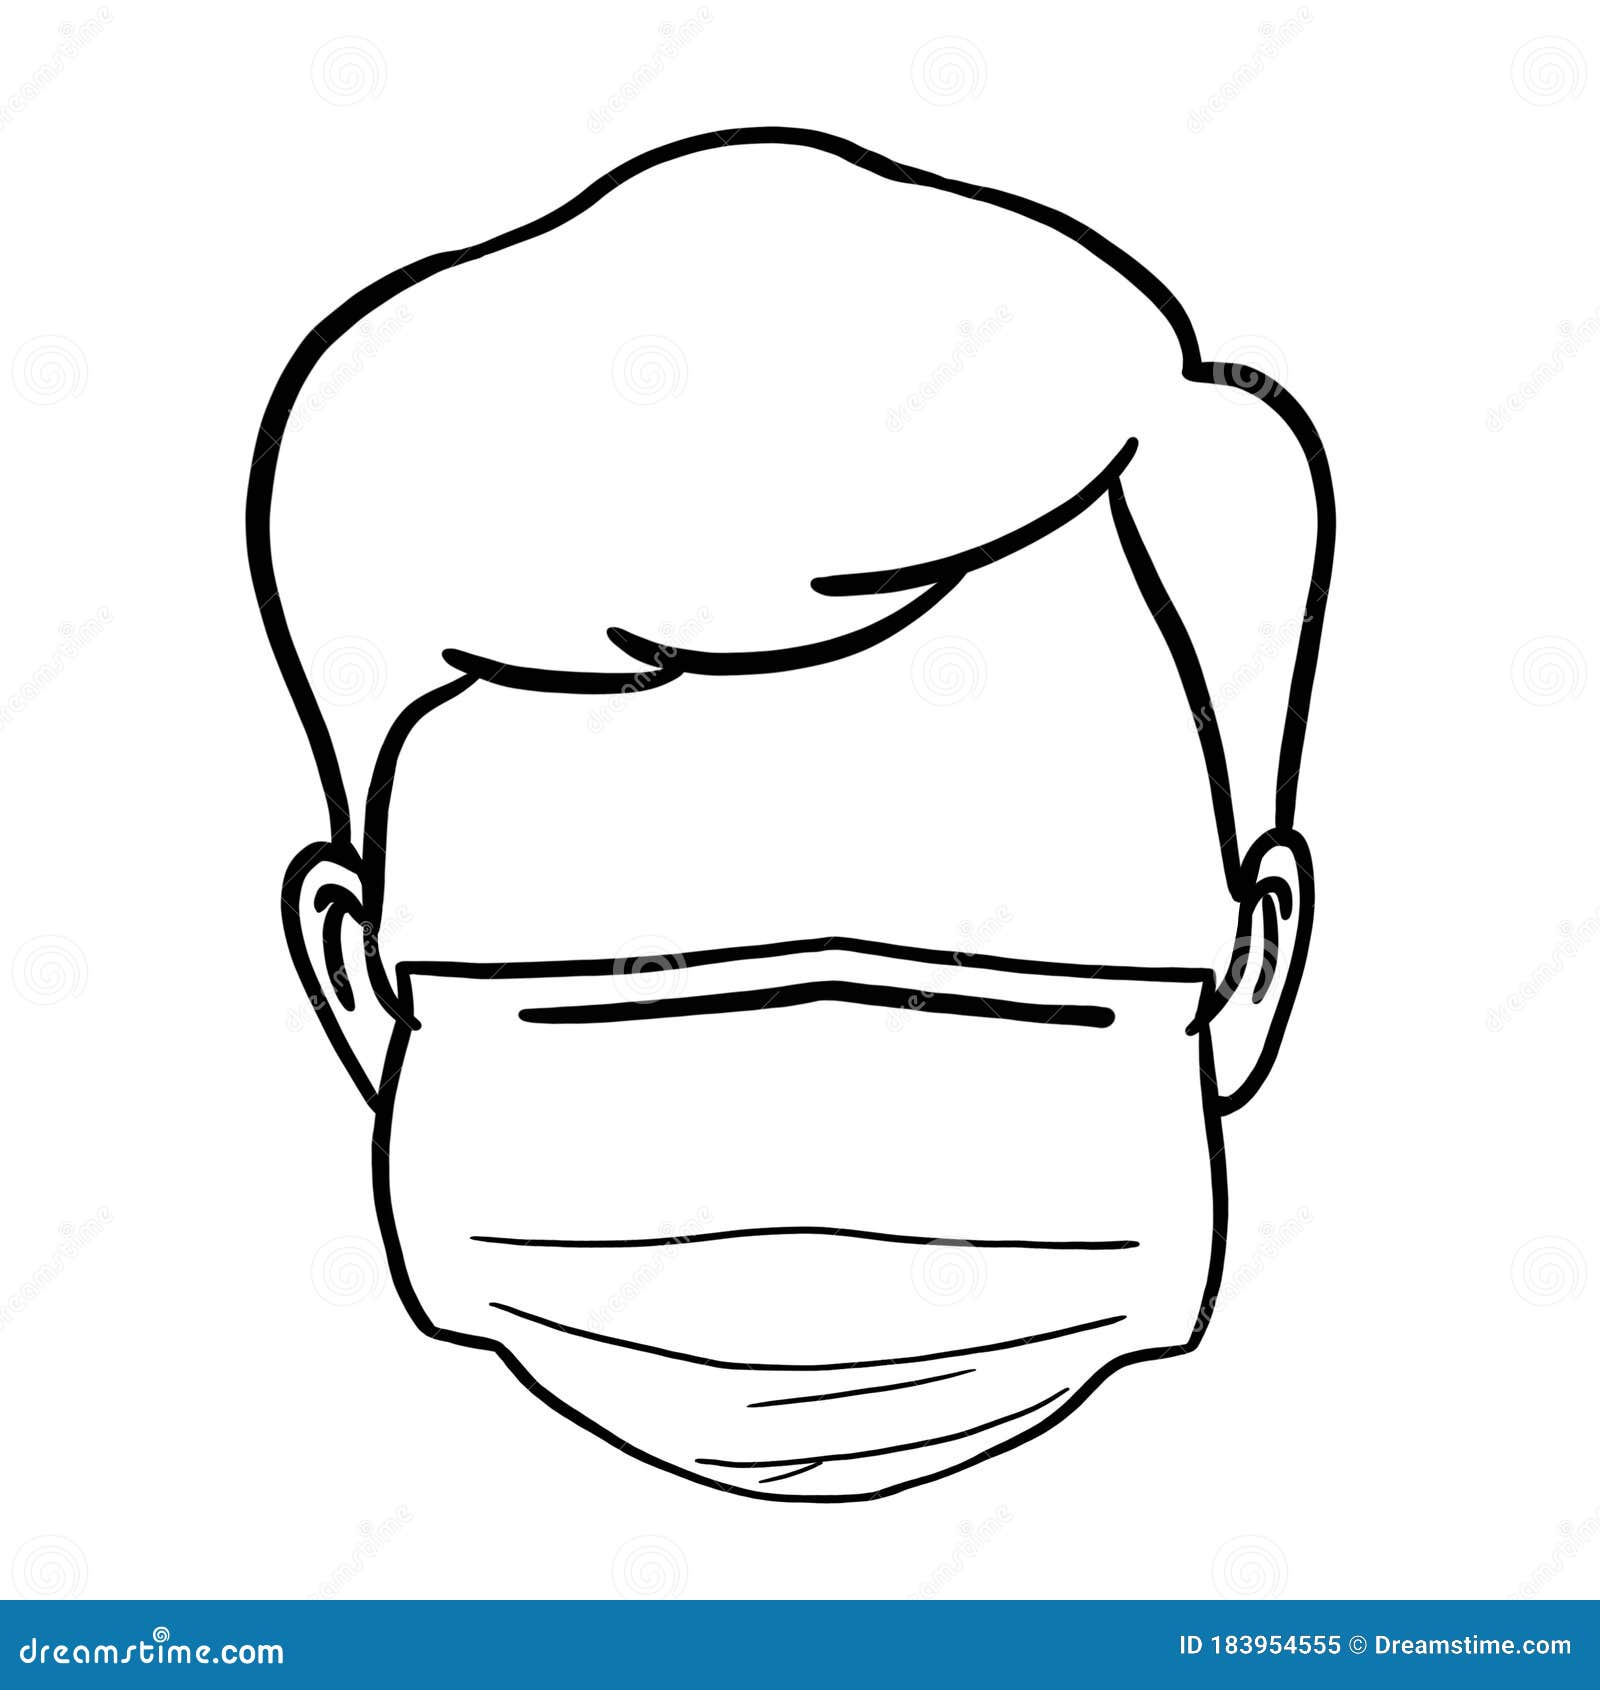 Outline Of Man Wearing Surgical Mask. Stock Illustration